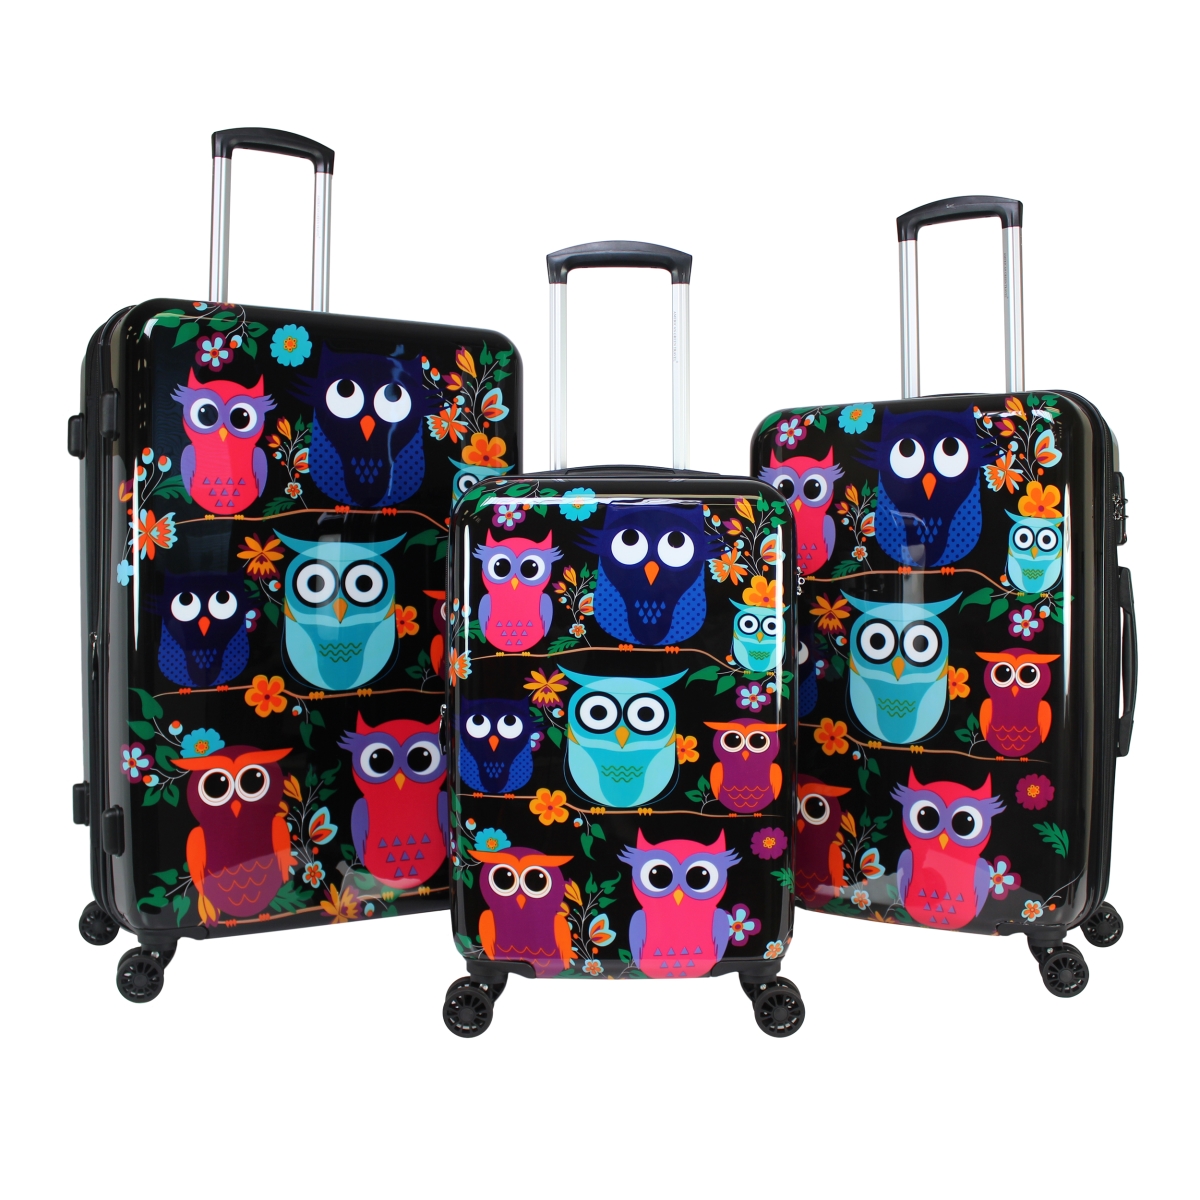 Wts5261-3e-owls 3 Piece Hardside Spinner Luggage Set - Owls